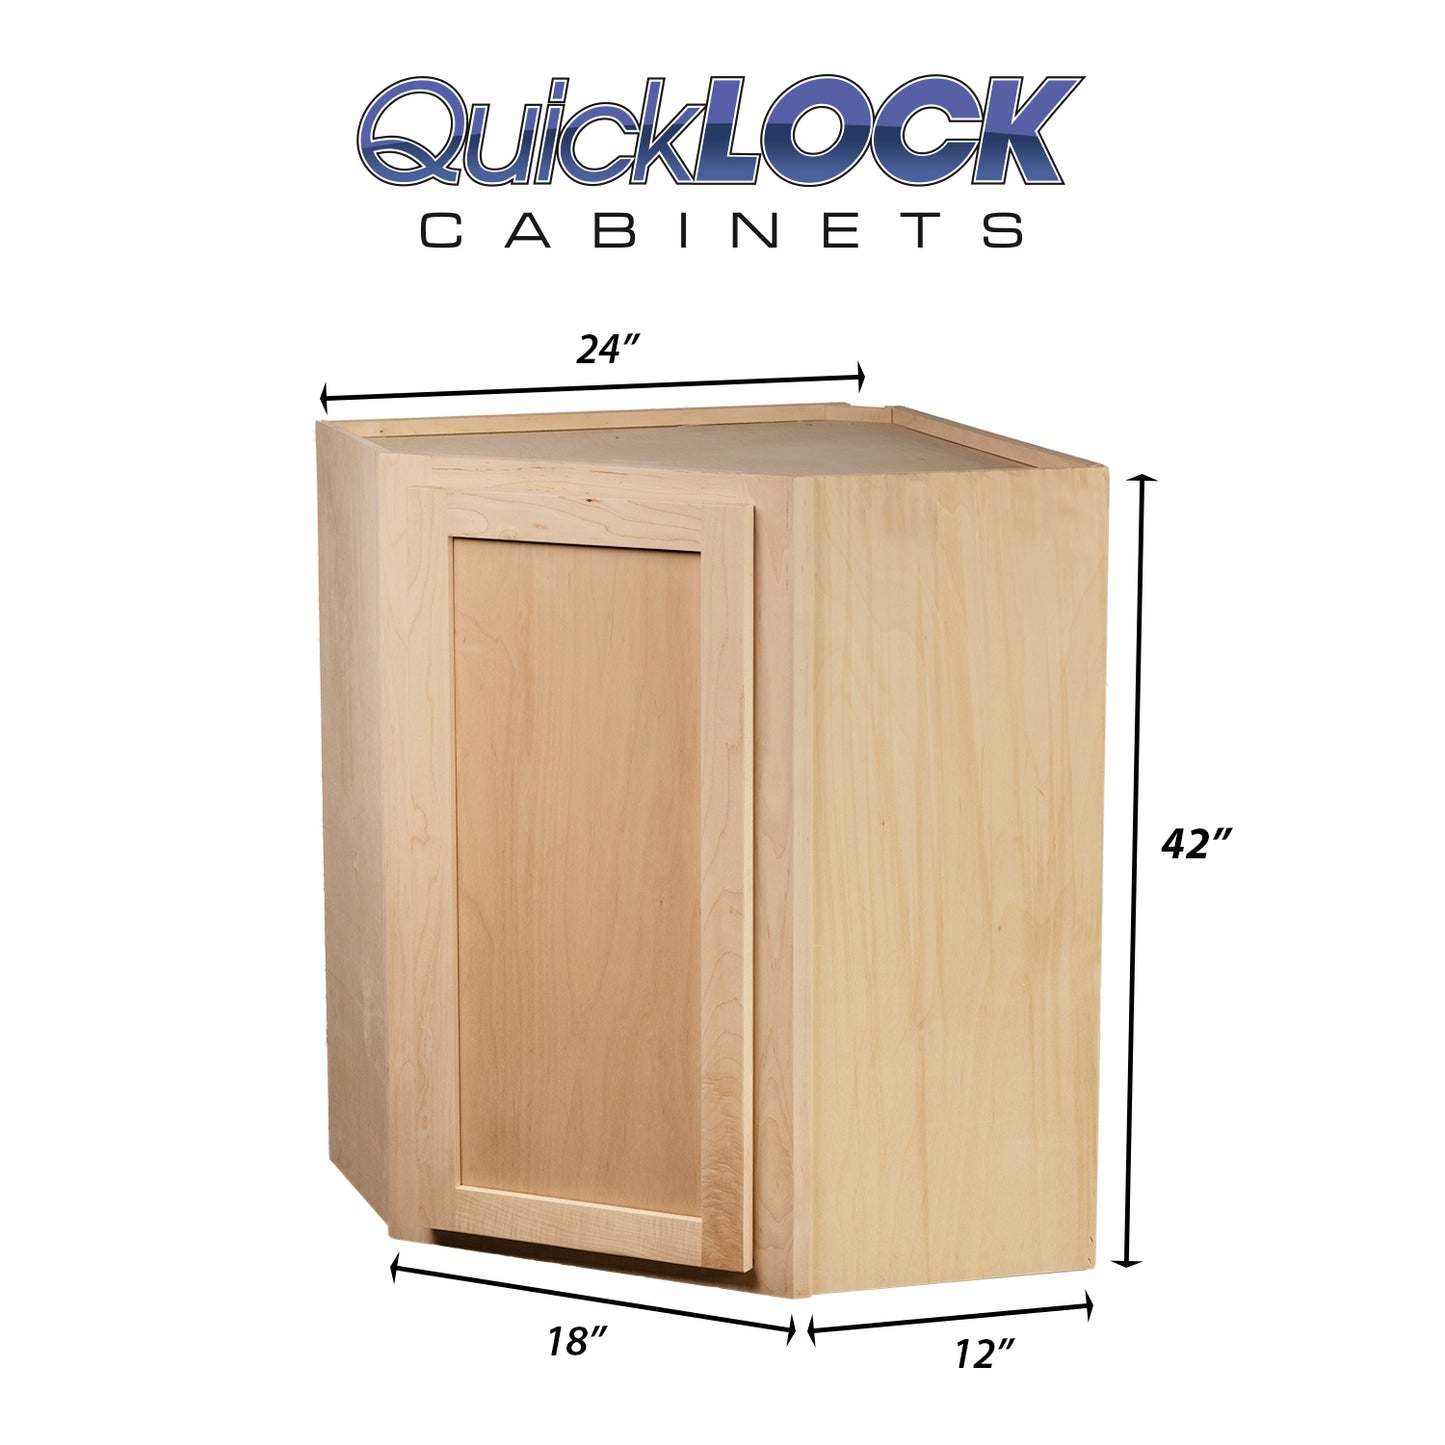 Quicklock RTA (Ready-to-Assemble) Raw Maple 24"Wx42"Hx12"D Wall Corner Cabinet